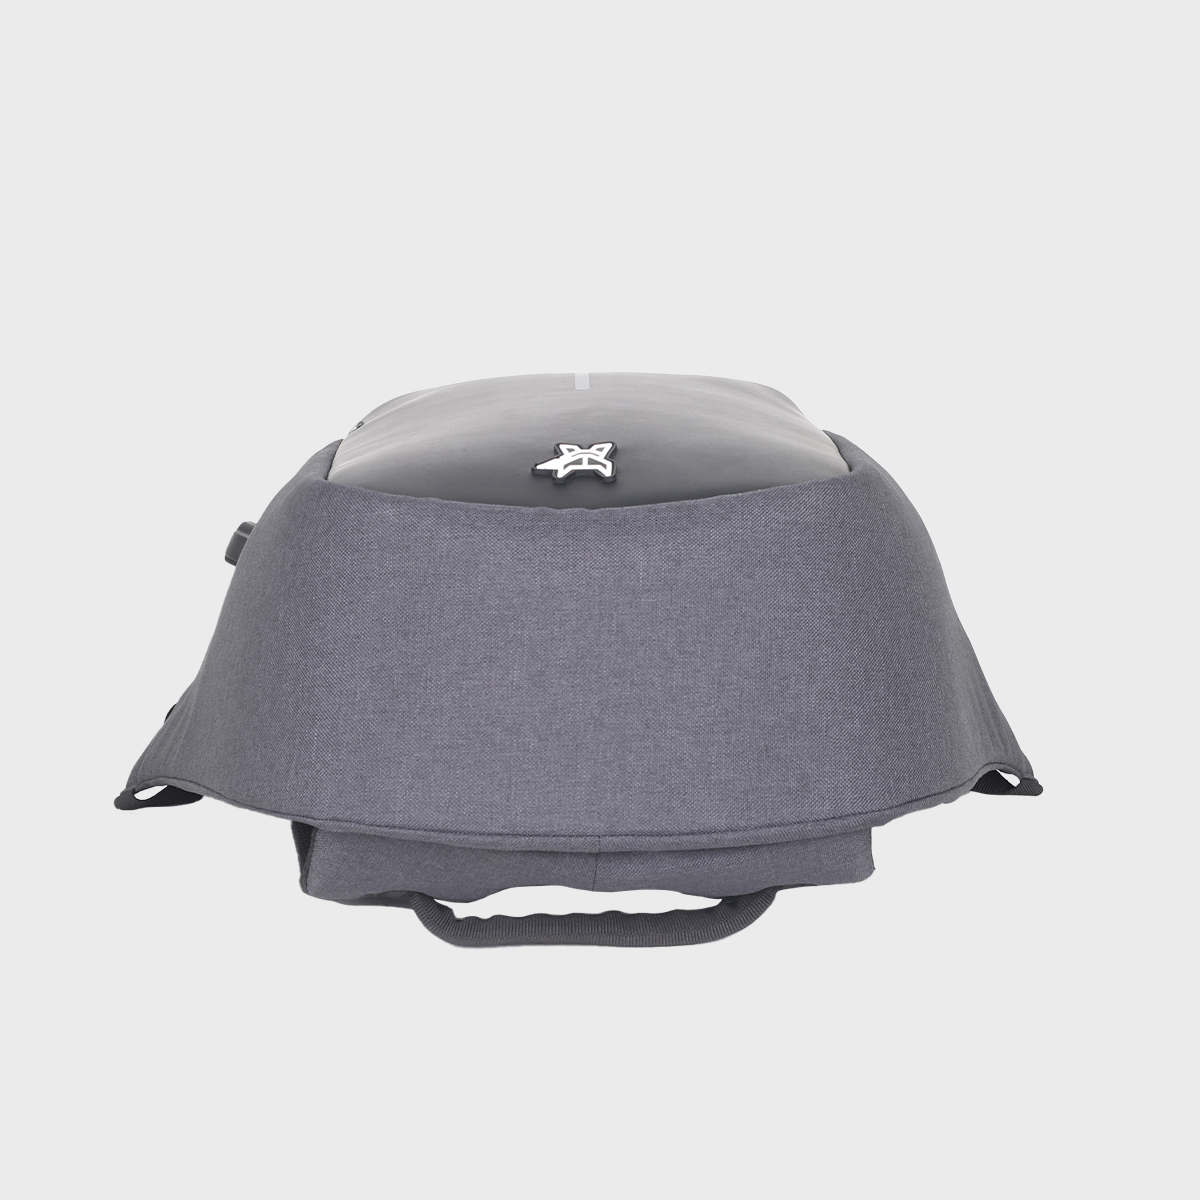 Arctic Fox Anti-Theft Dark Grey Laptop Backpack